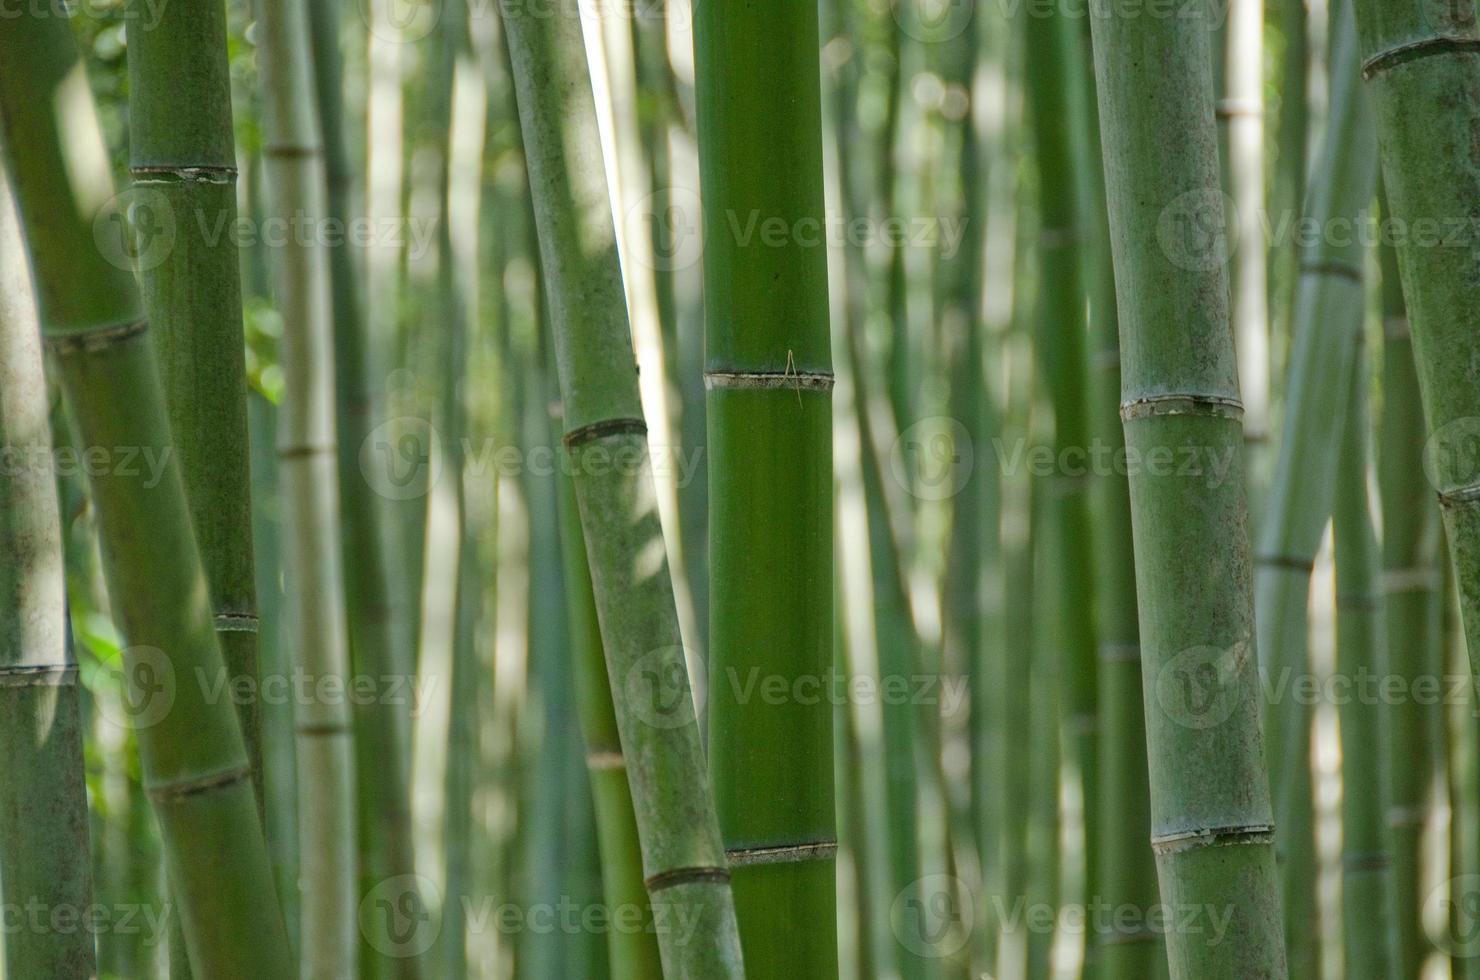 floresta de bambu vista de lado foto